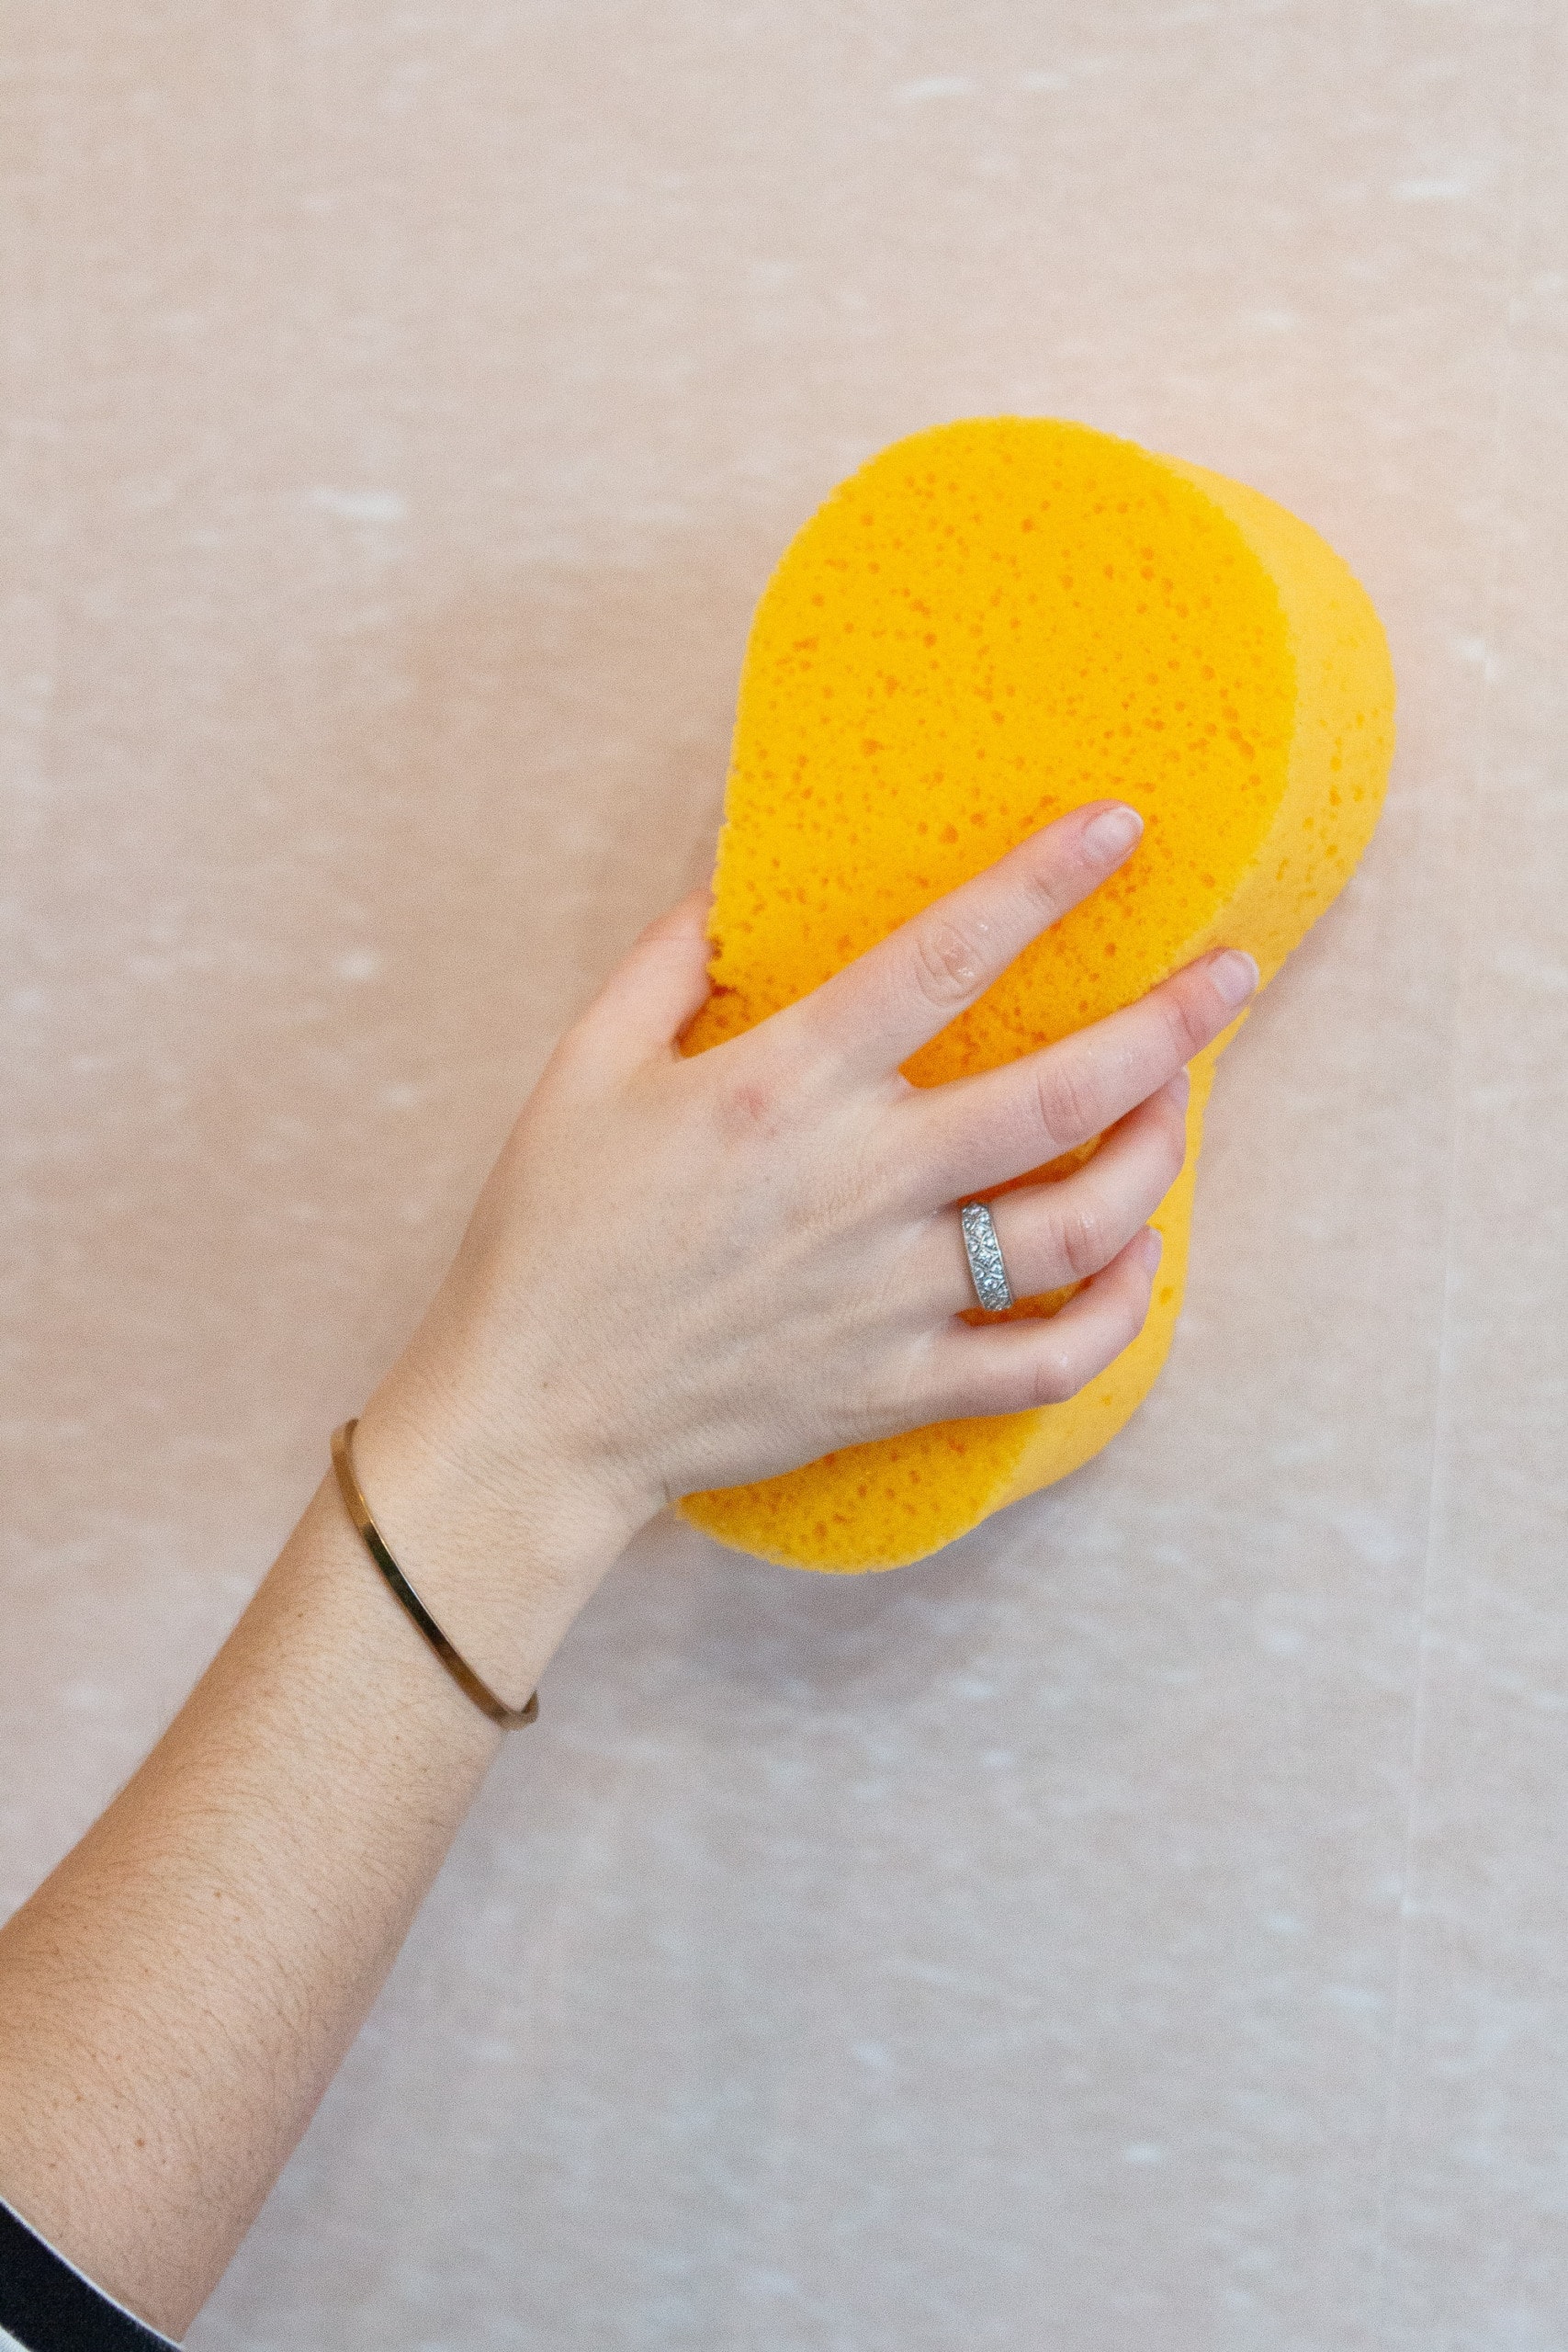 Sponge away excess glue